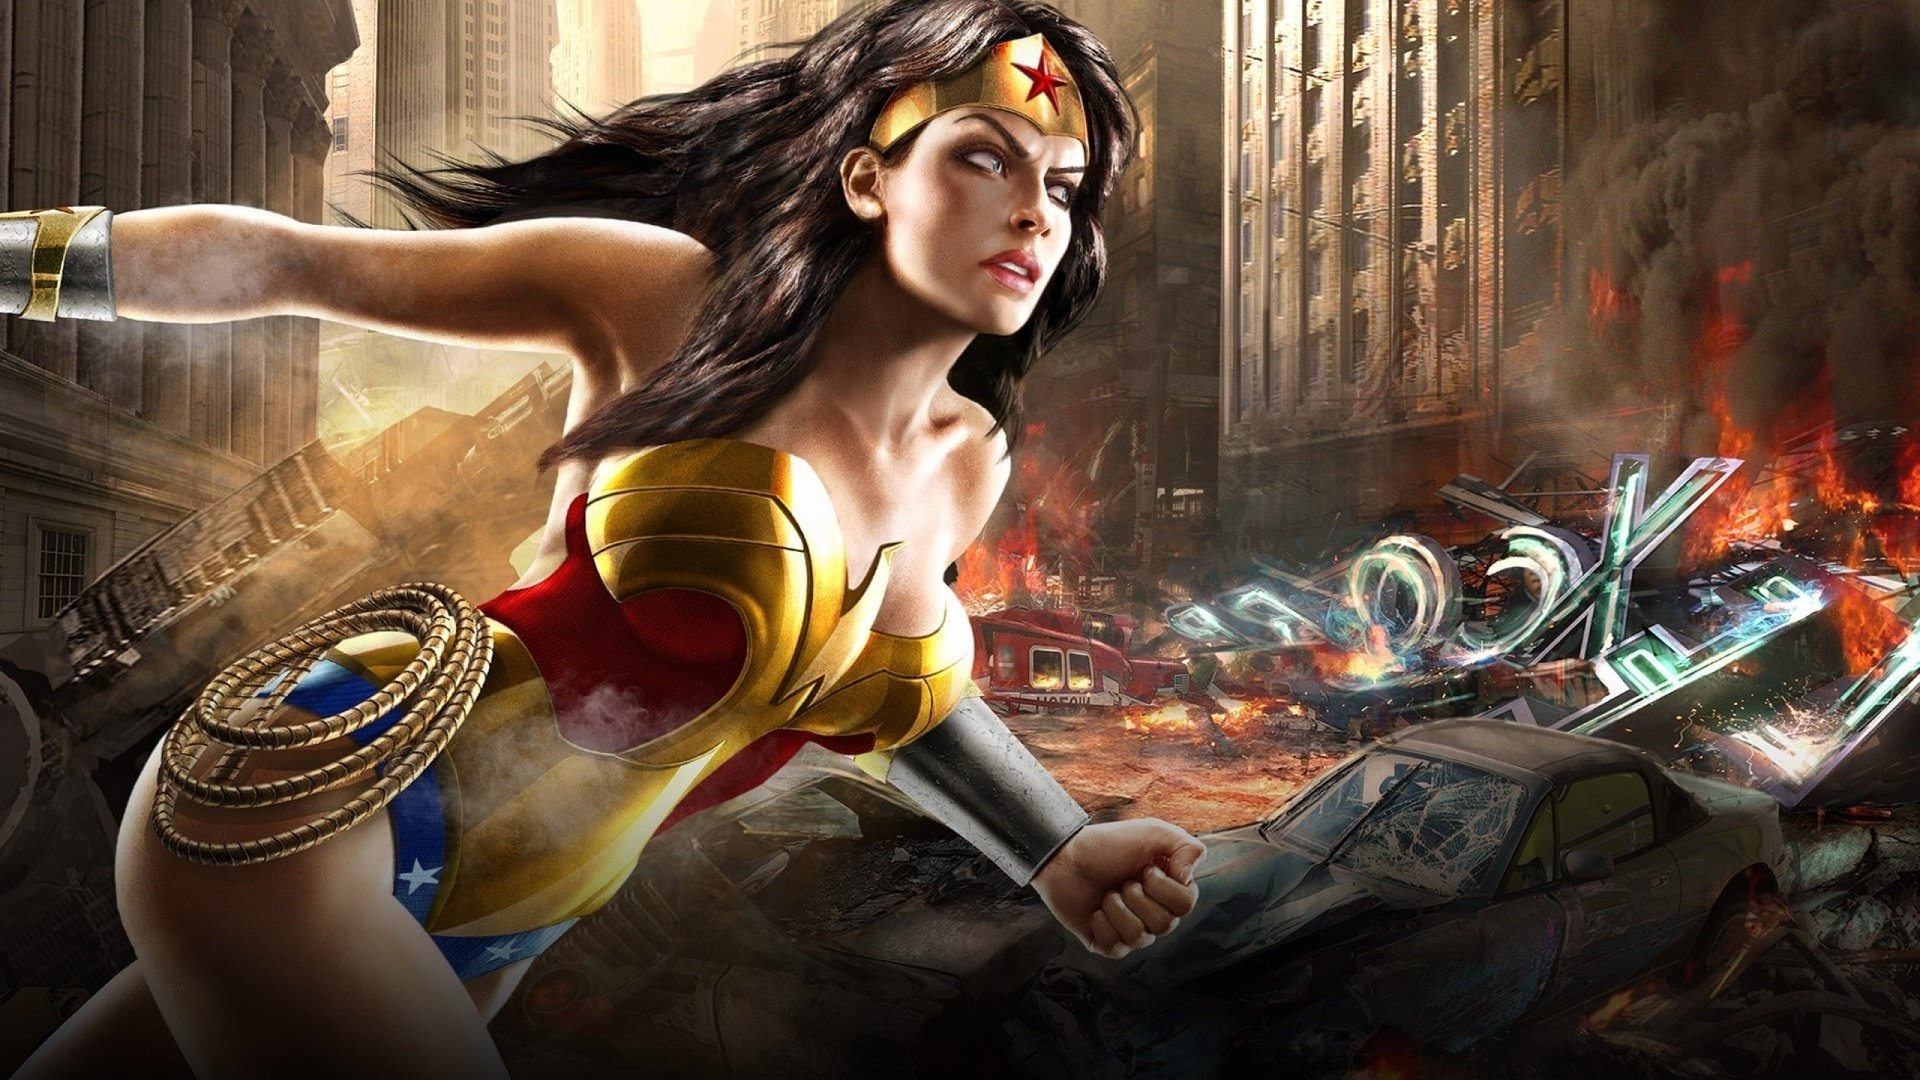 4 Wonder Woman Comic 318003 Hd Wallpaper Backgrounds Download.